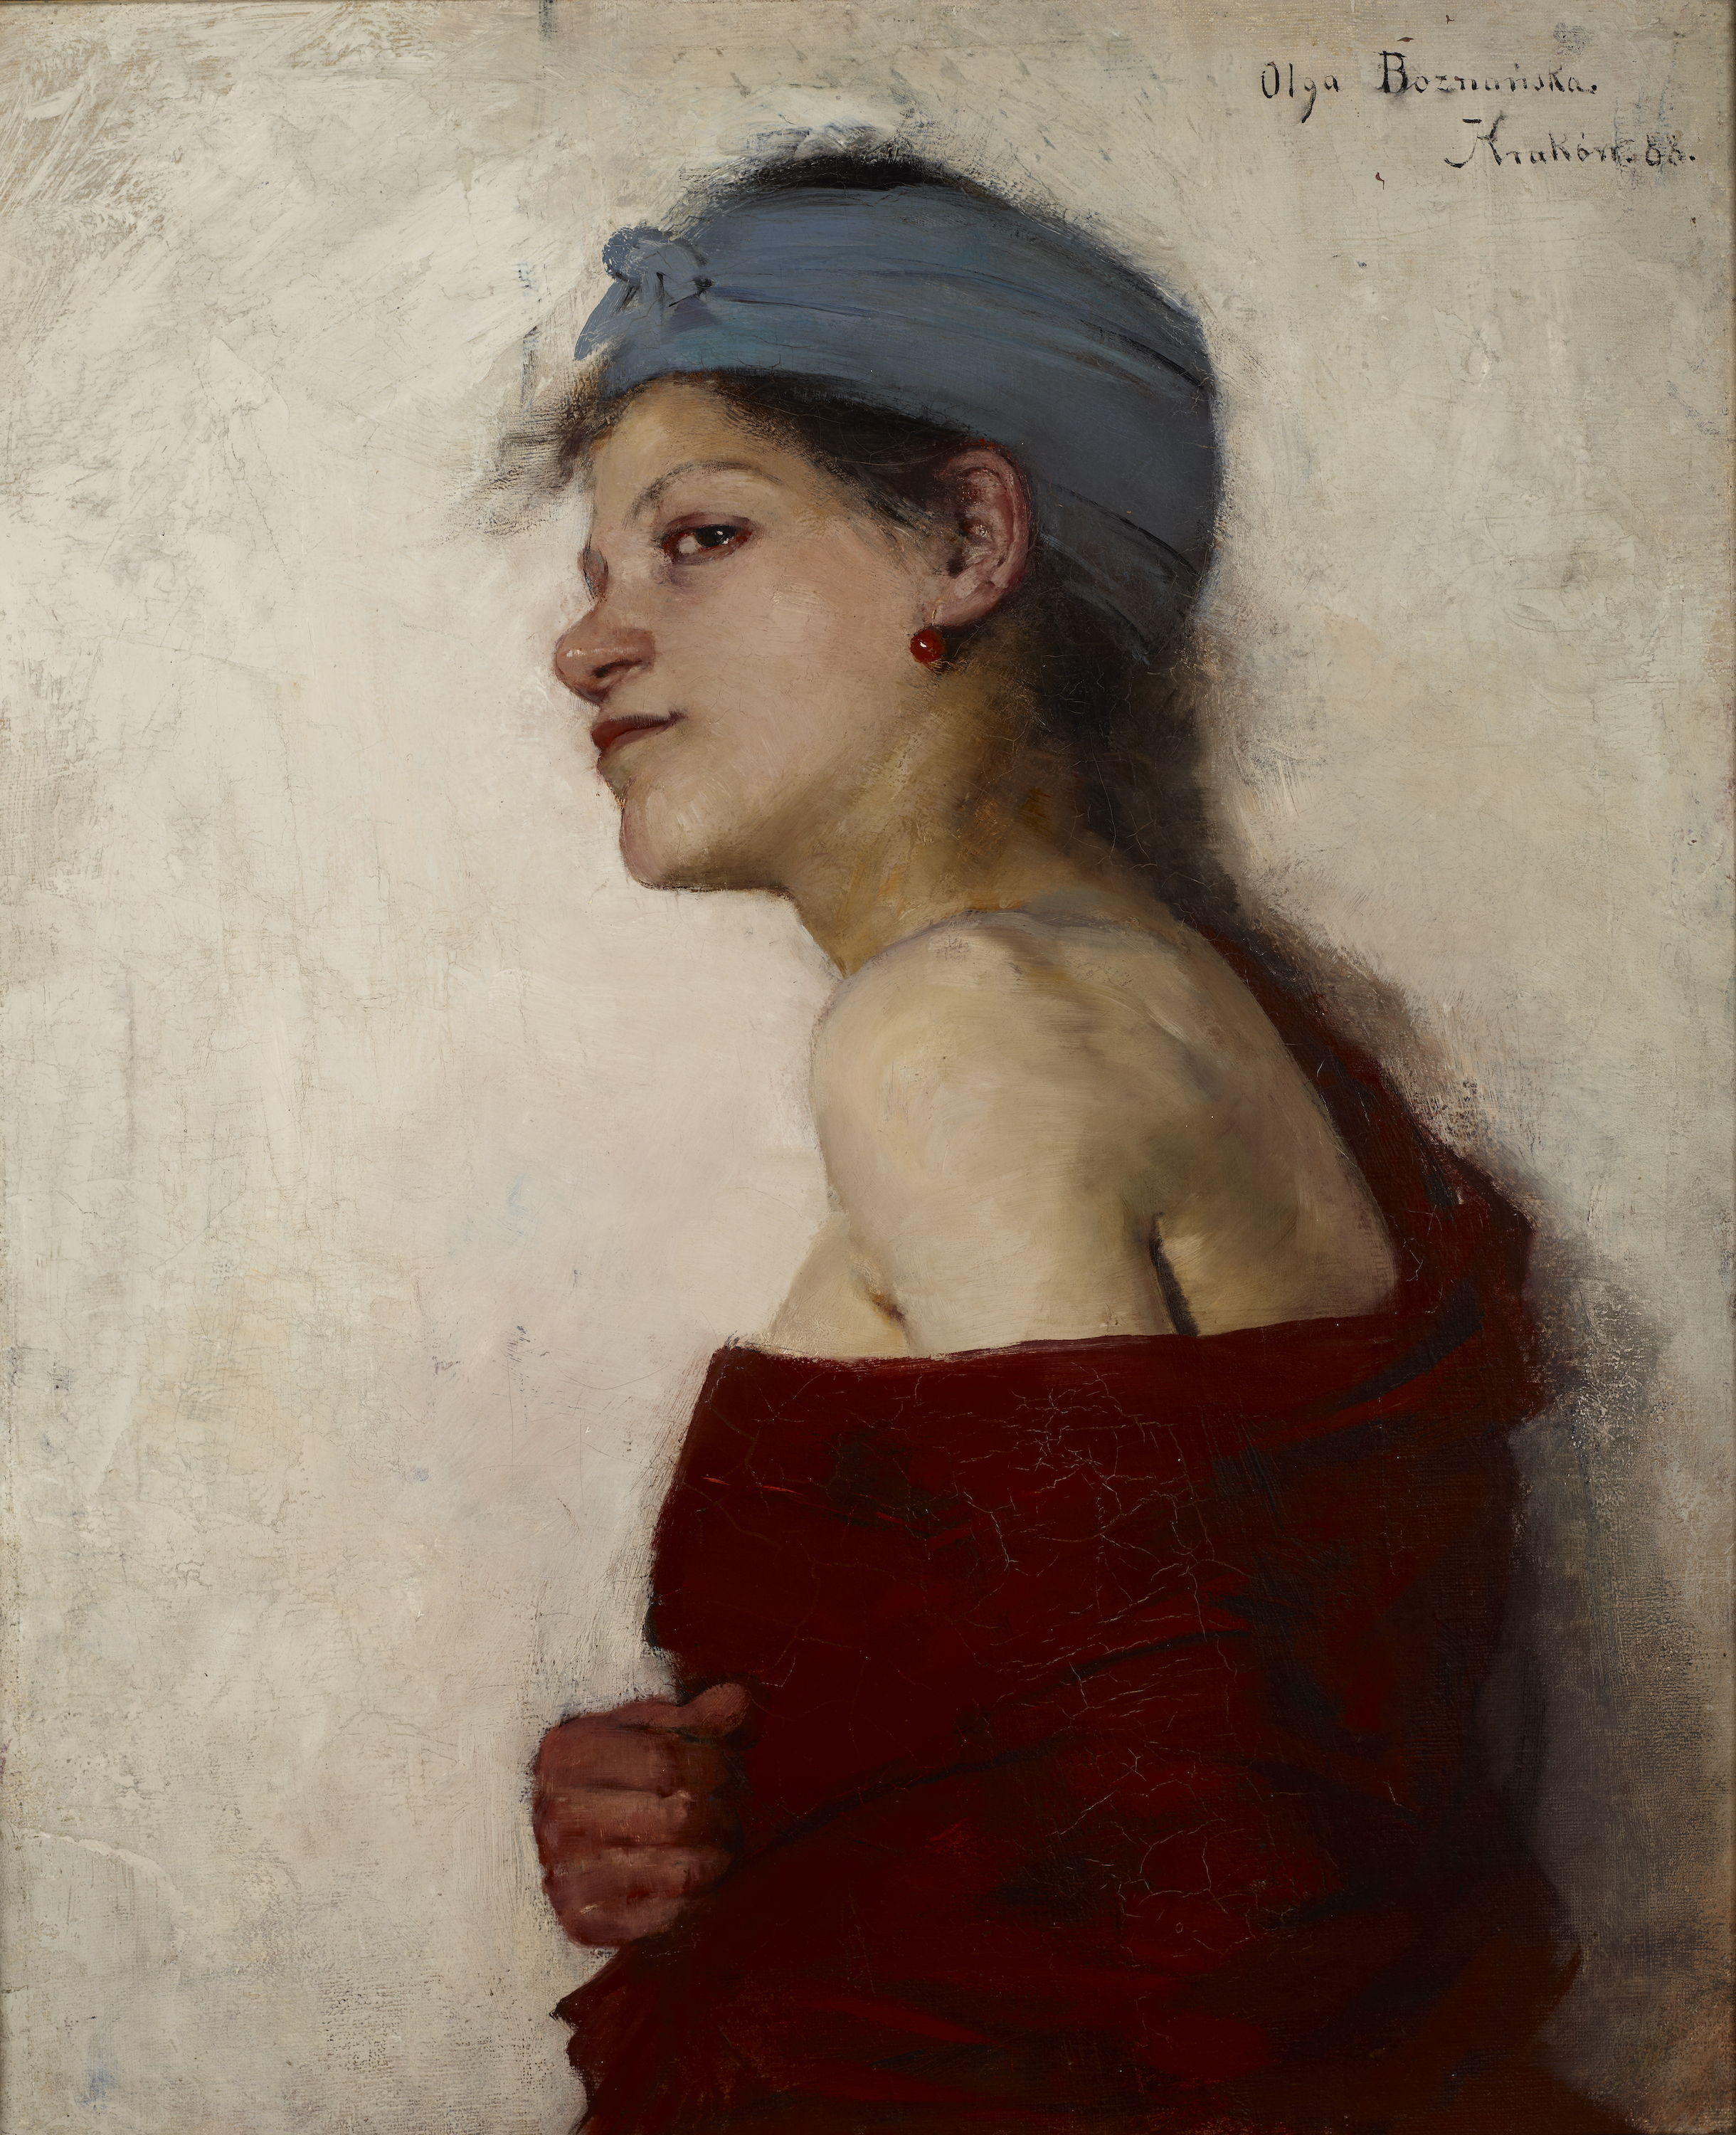 Portrait de Femme (Bohémienne) by Olga Boznańska - 1888 